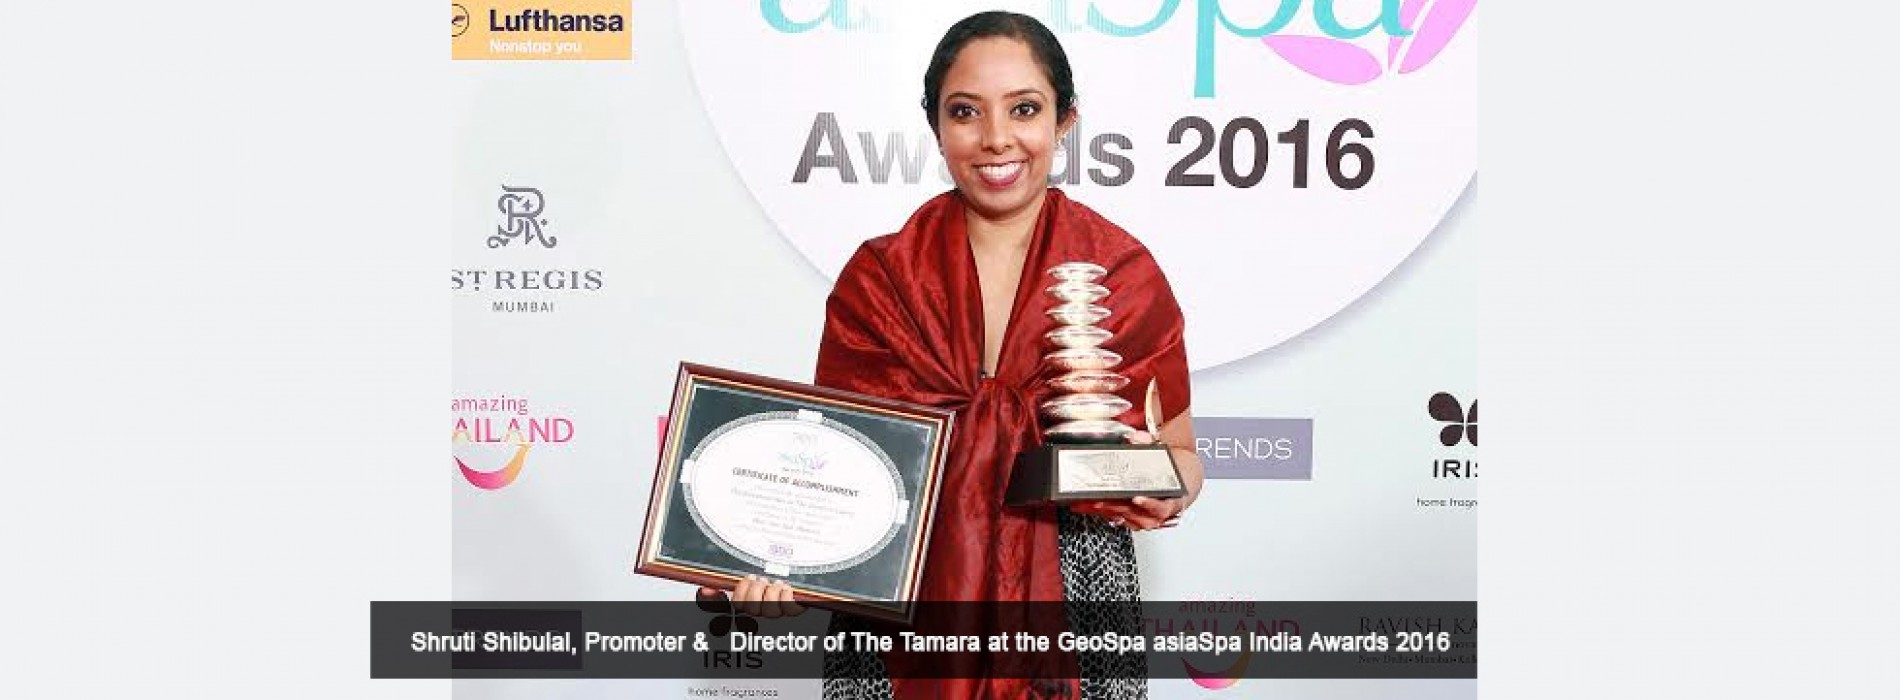 The Elevation Spa at The Tamara Coorg awarded ‘Best New Spa (Resort)’ at the GeoSpa asiaSpa India Awards 2016